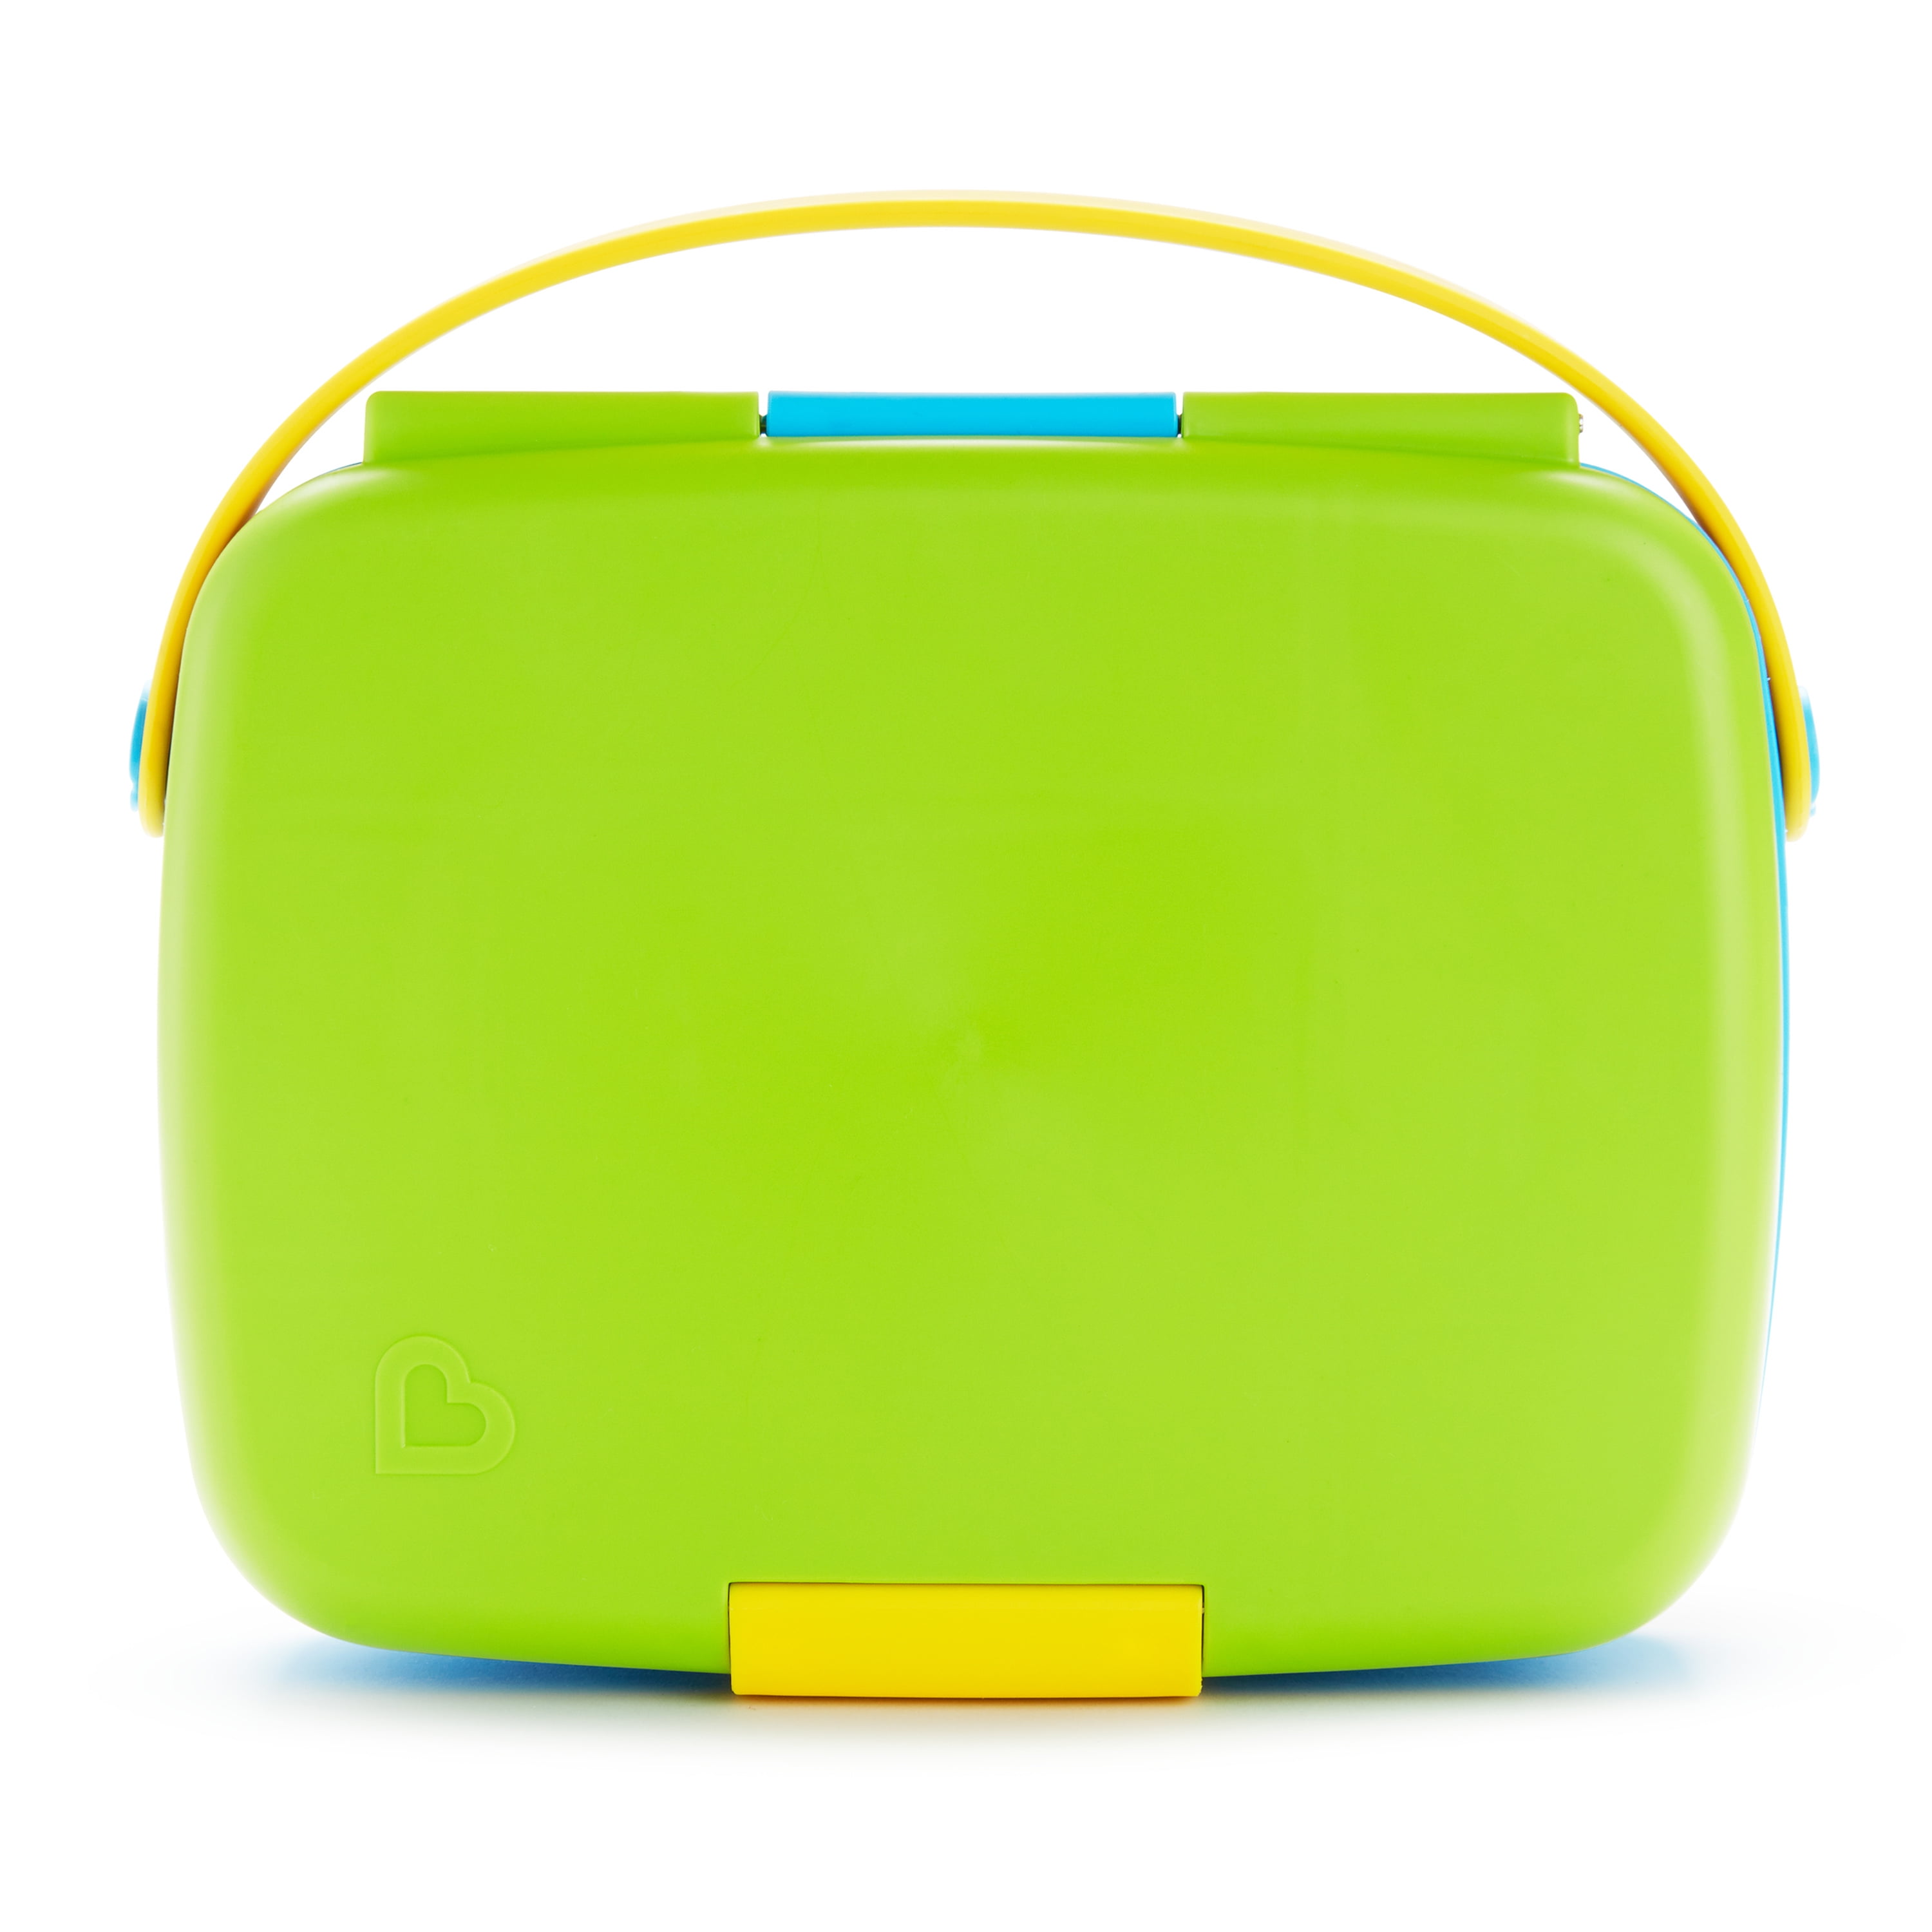 Munchkin® Lunch™ Bento Box for Kids, Includes Utensils, Yellow